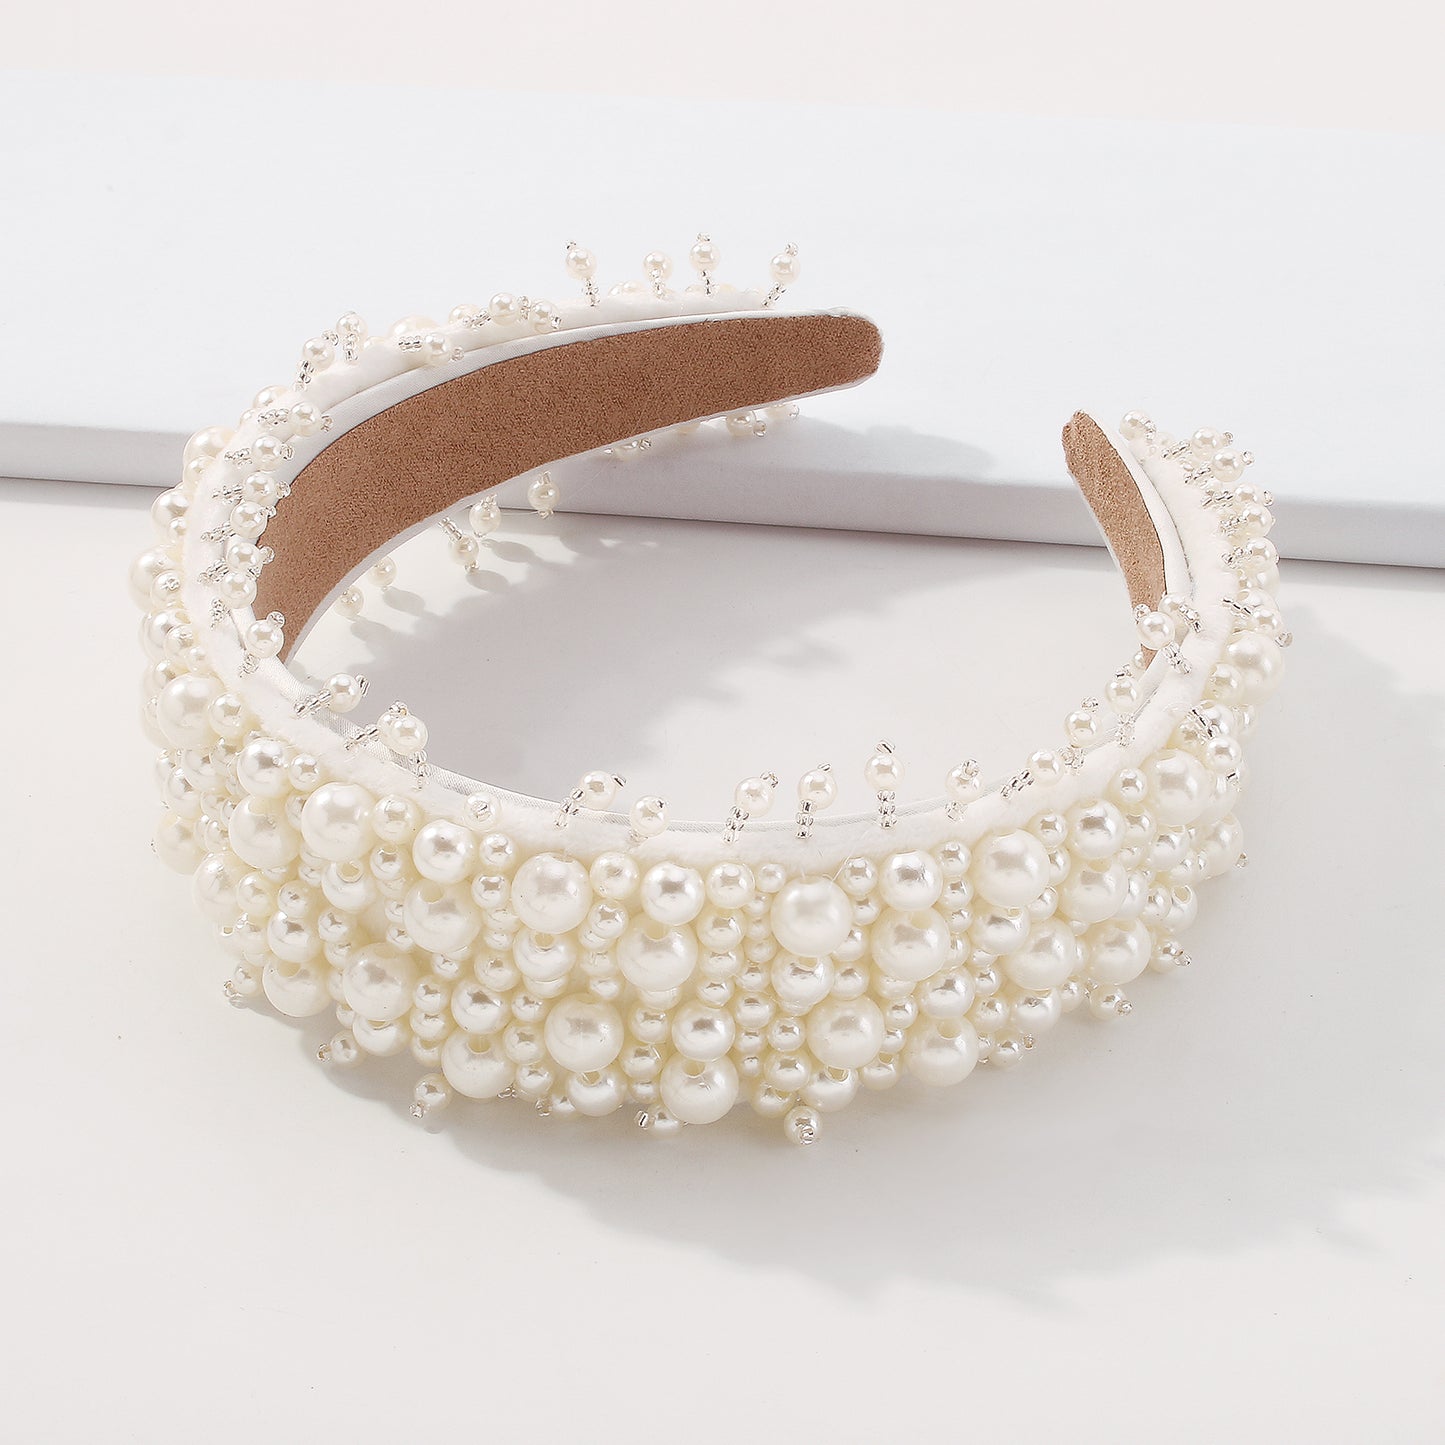 Baroque Wide Imitation Pearl Headbands medyjewelry